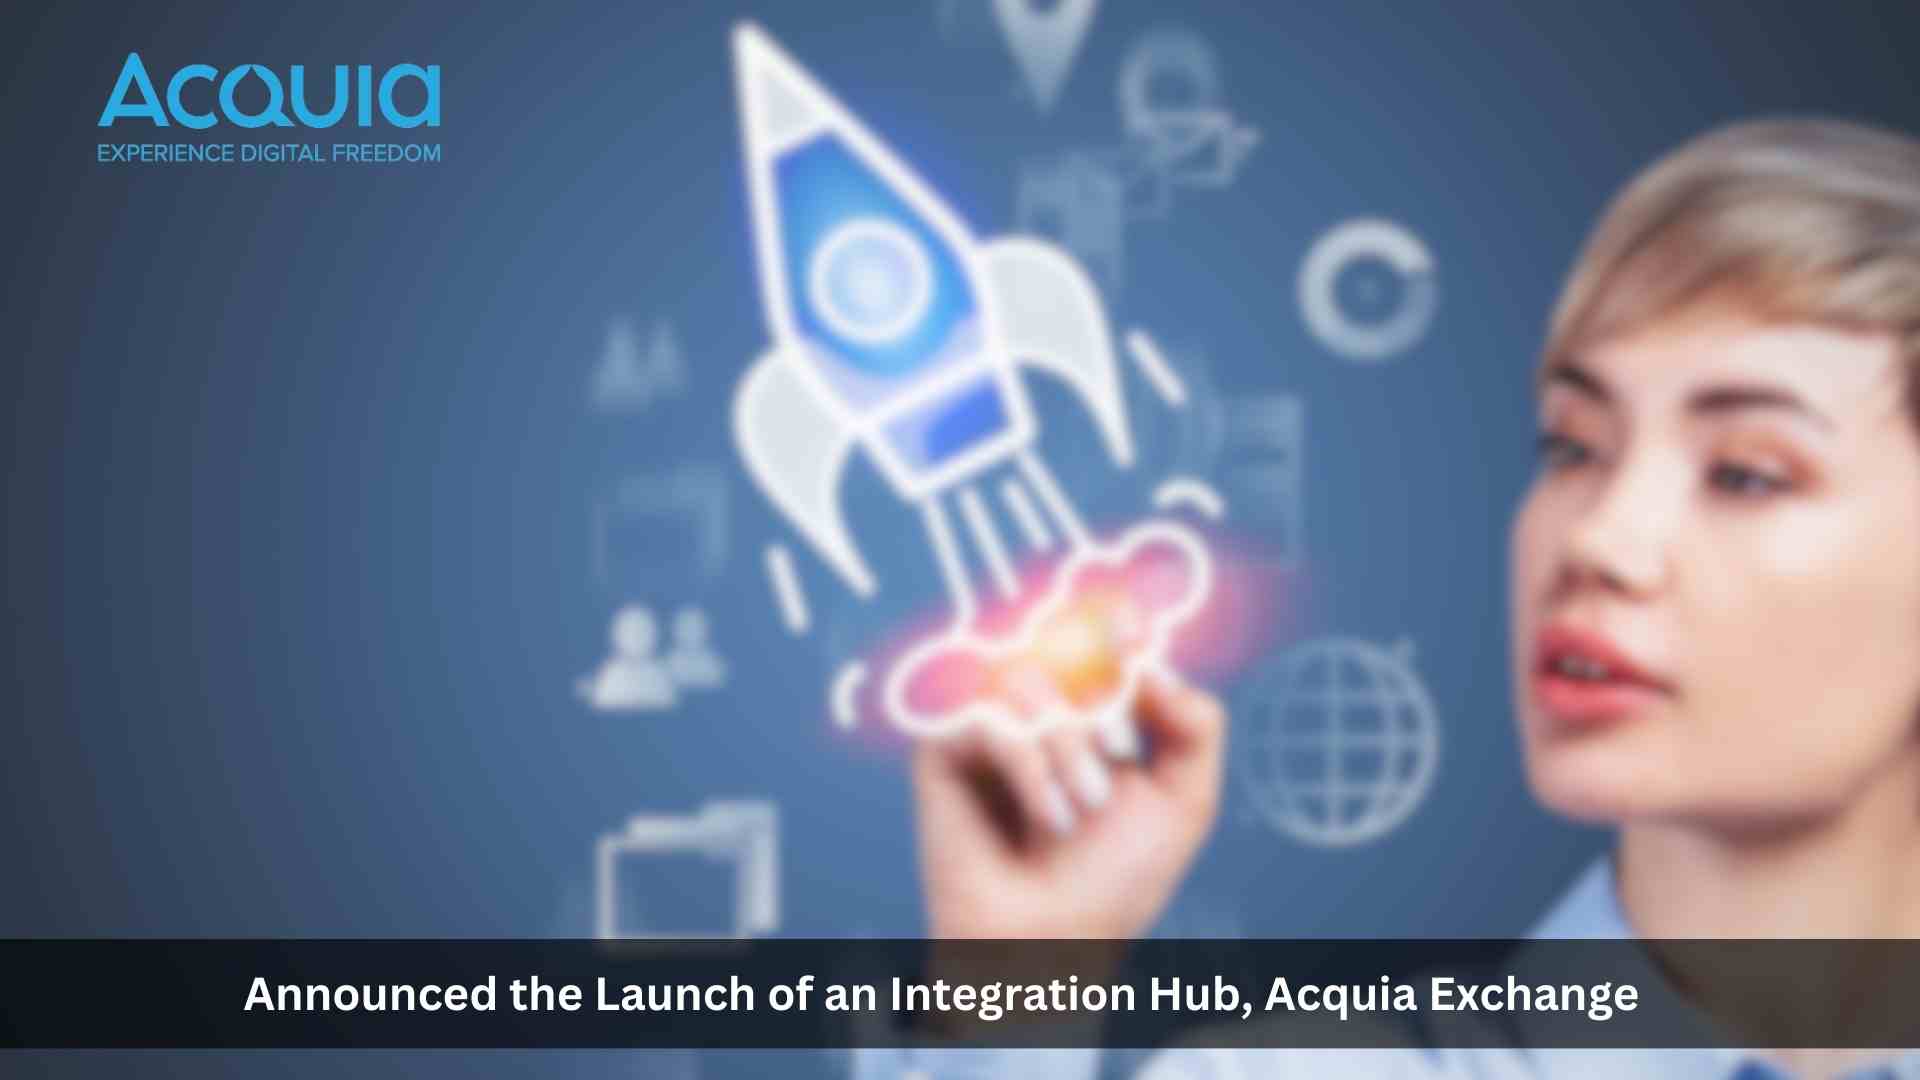 Acquia Launches Acquia Exchange, Providing an Integration Hub for Open Digital Experience Platform